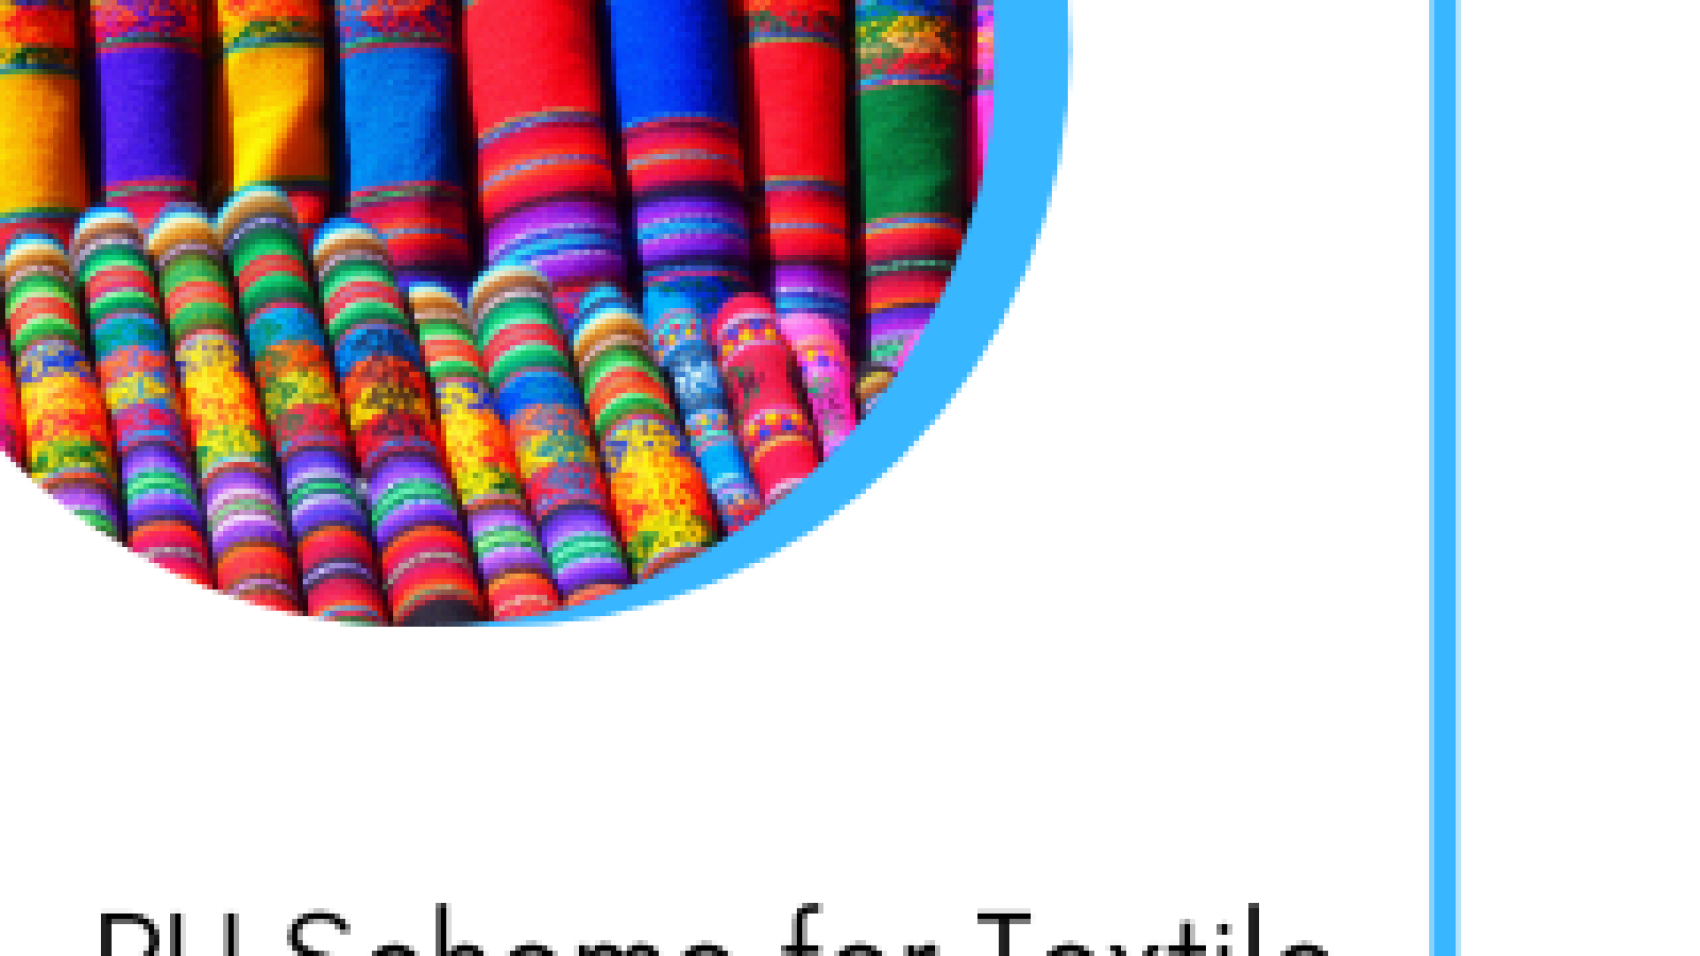 PLI scheme for Textile sector